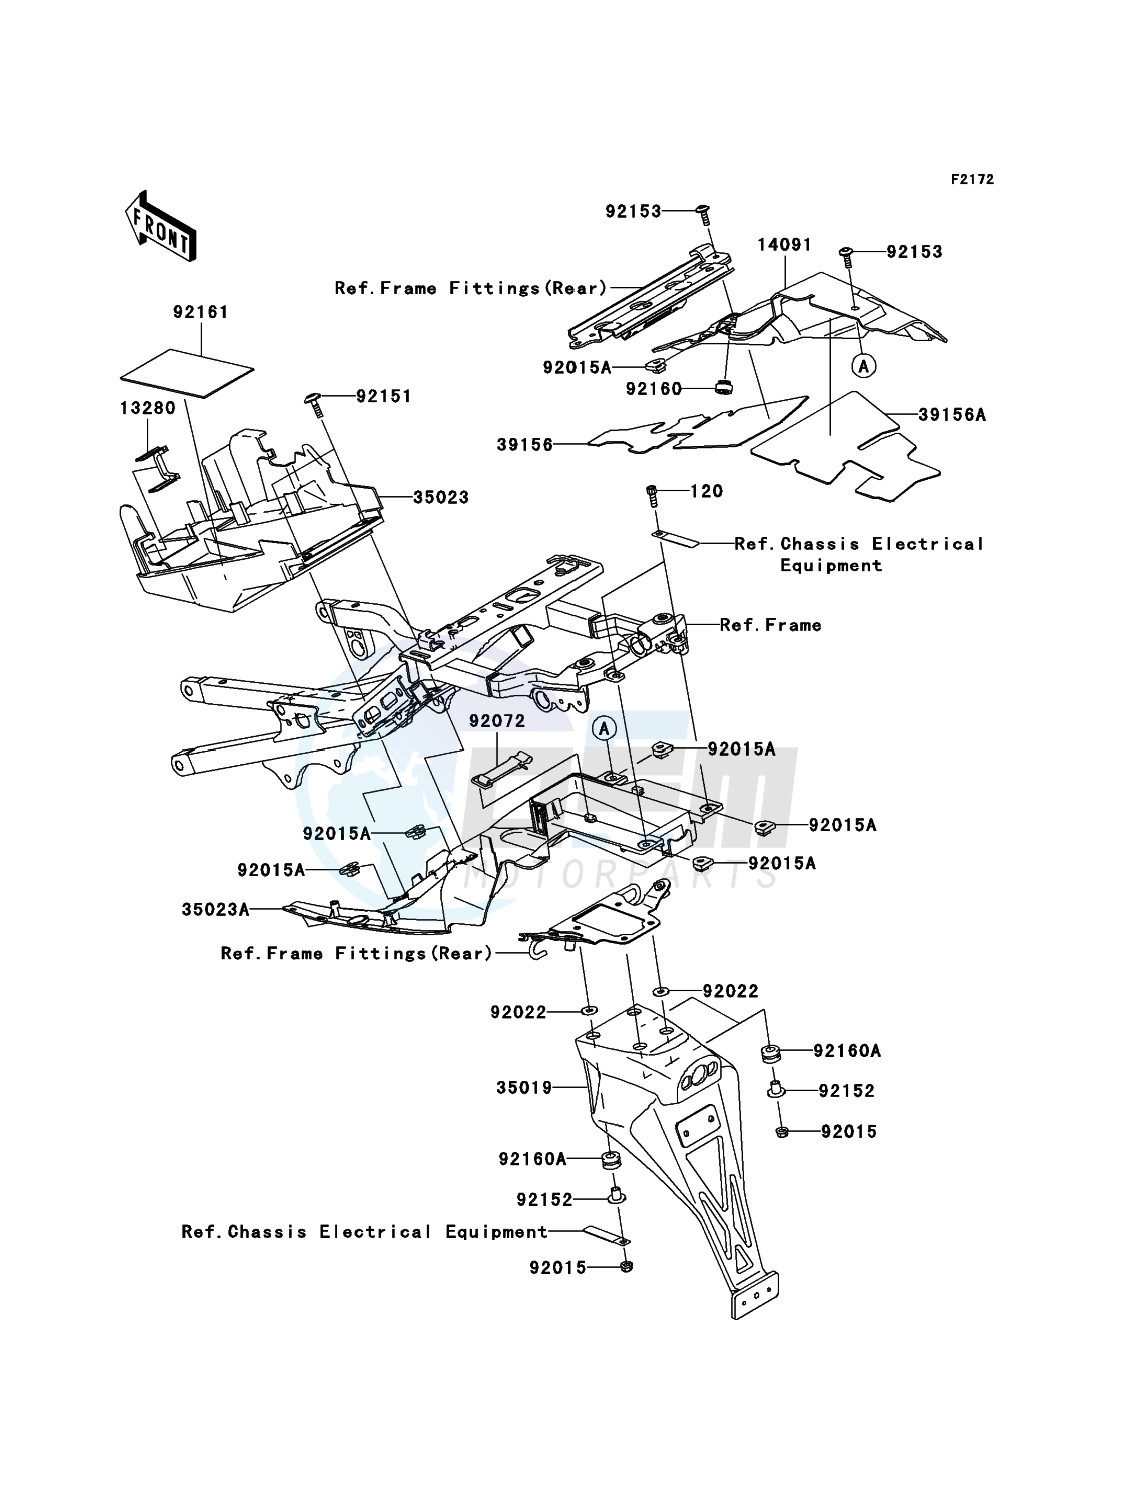 Rear Fender(s) blueprint